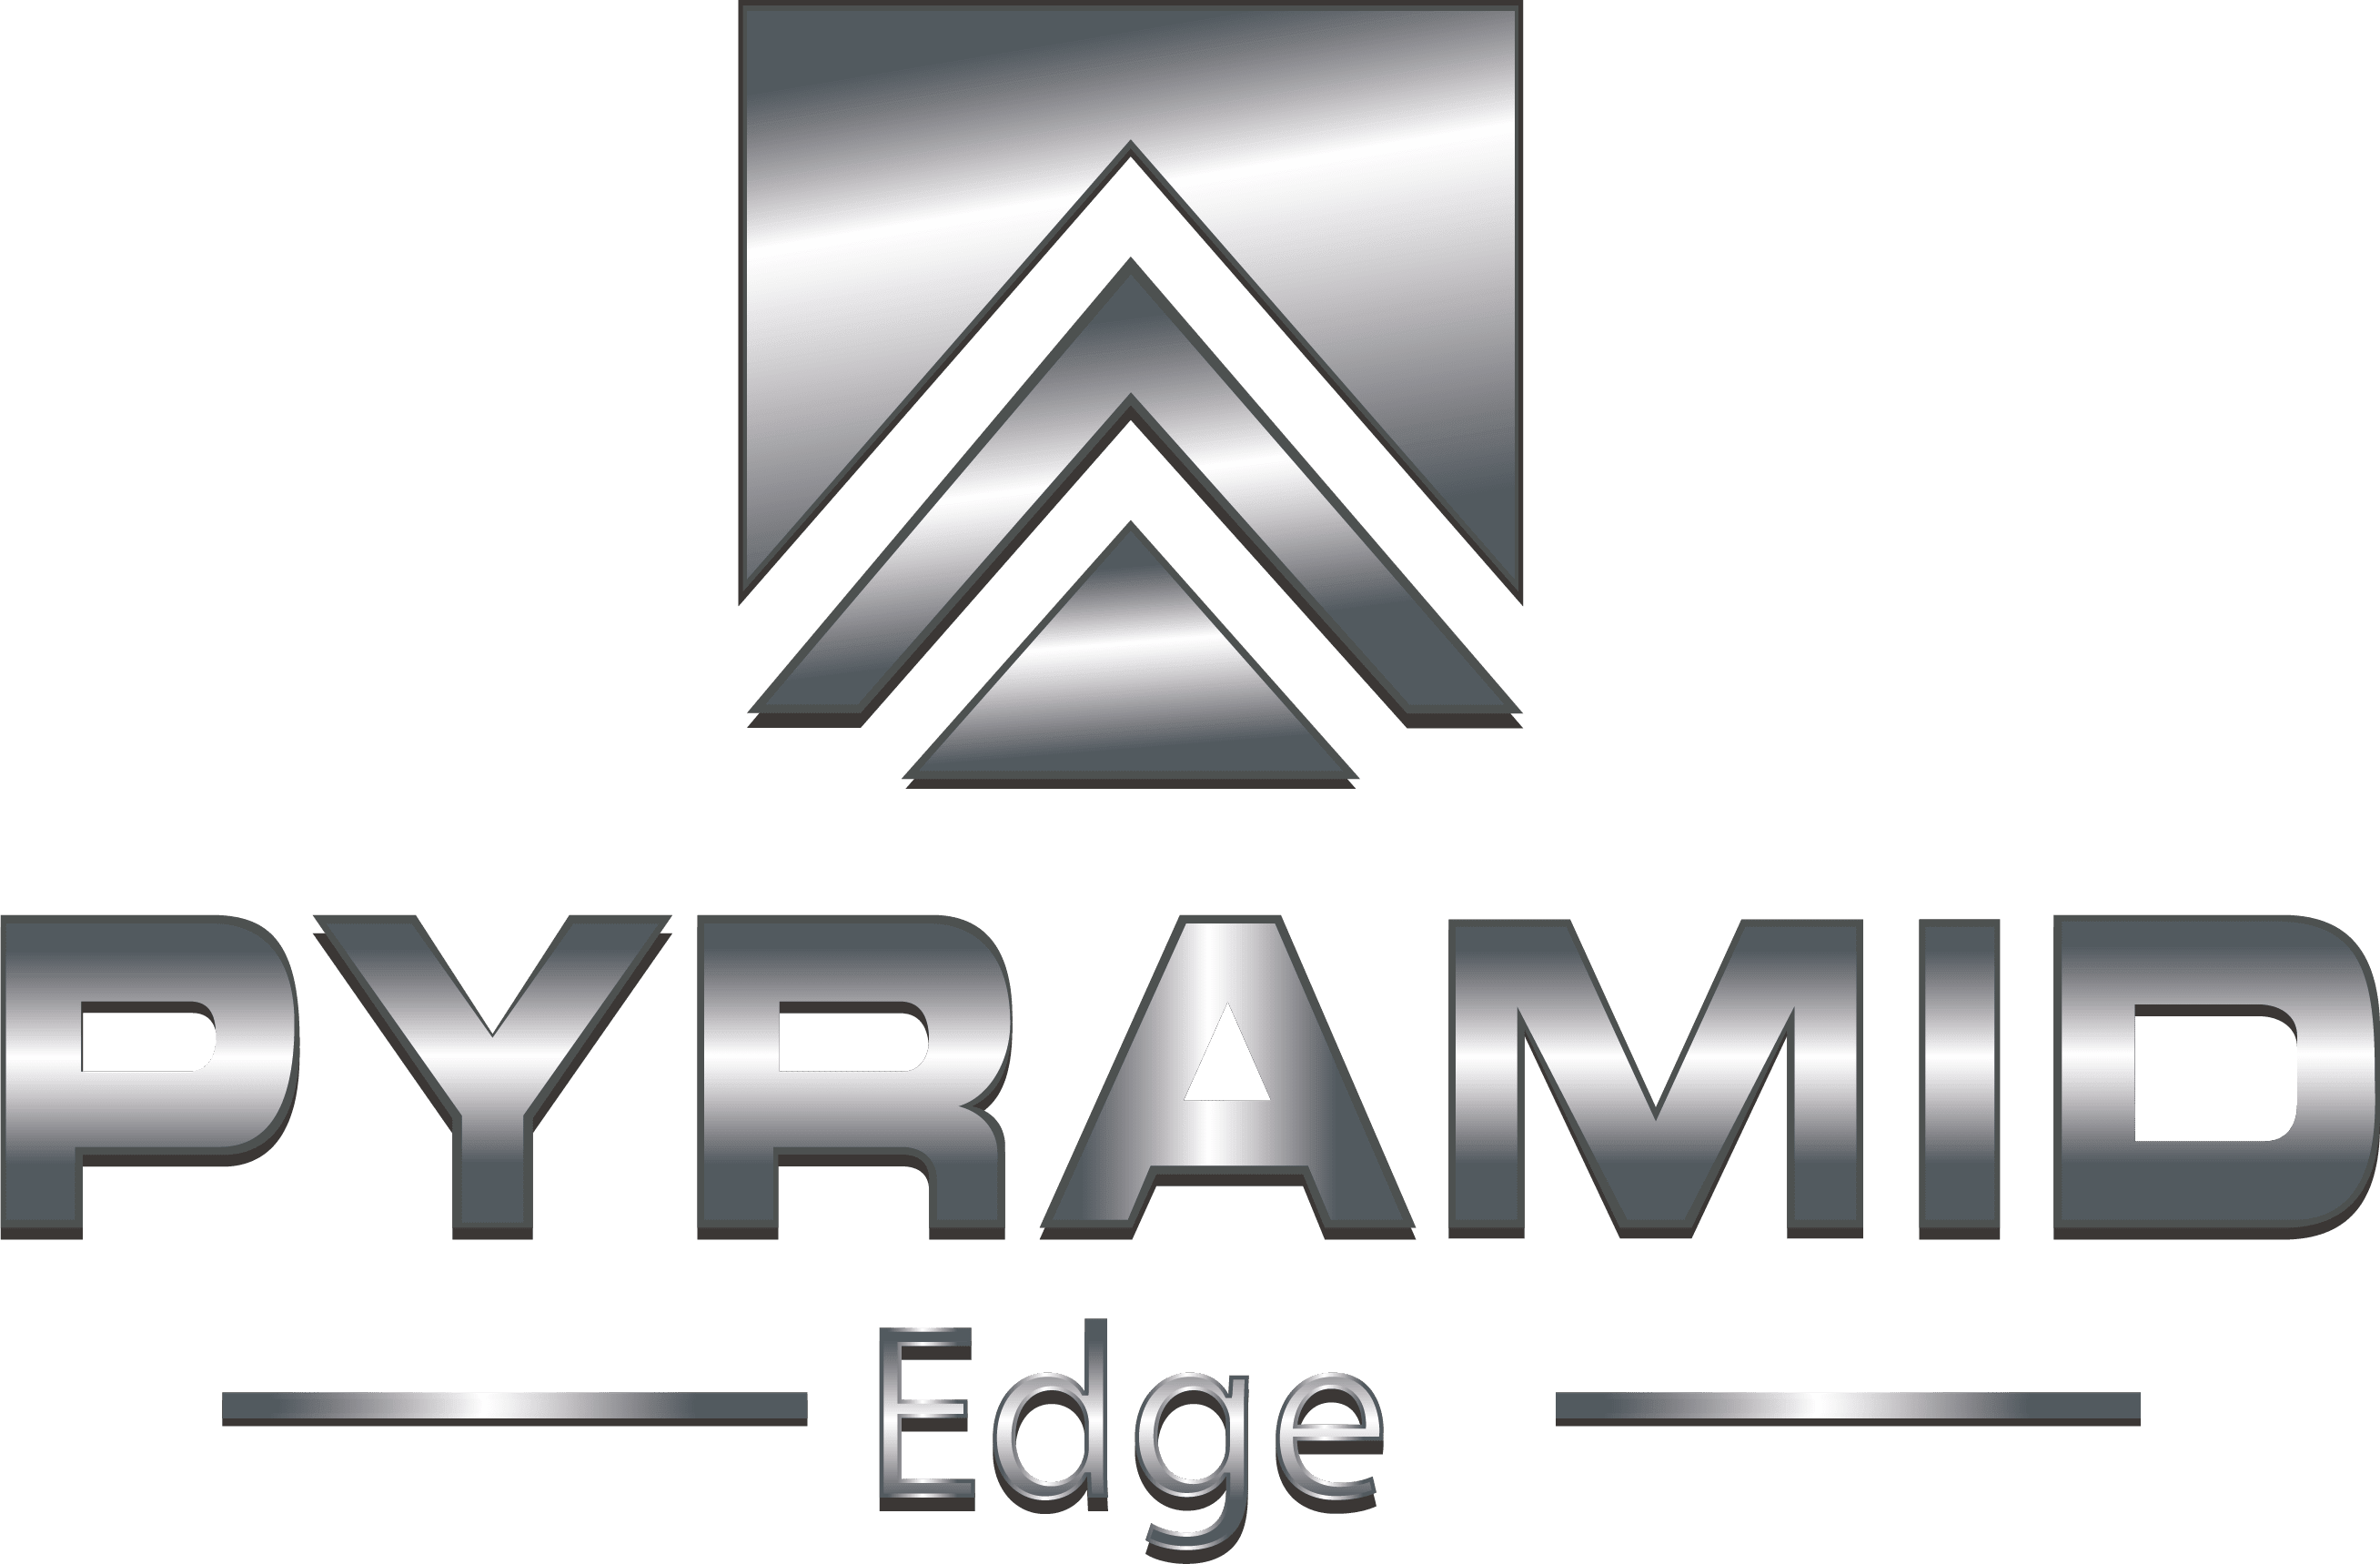 Pyramid Edge LLC